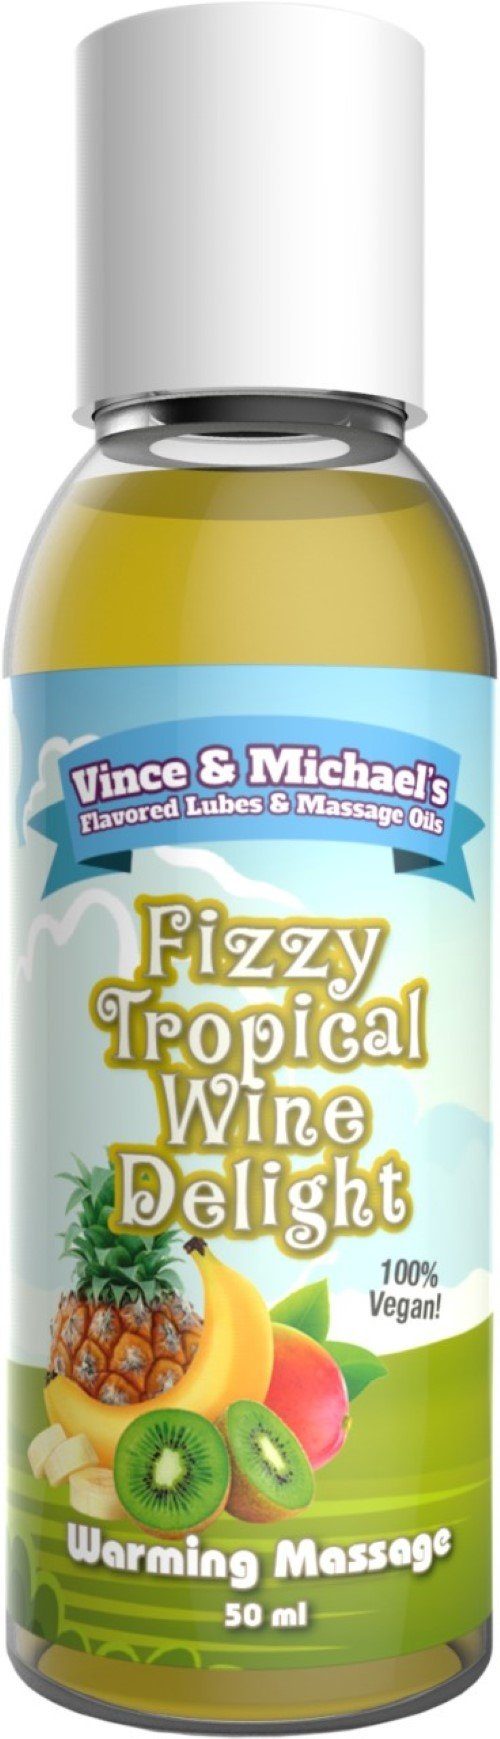 & MICHAEL's ml Wine Vince VINCE 50 Tropical Delight - Gleitgel Fizzy Michael´s 50ml & Warming